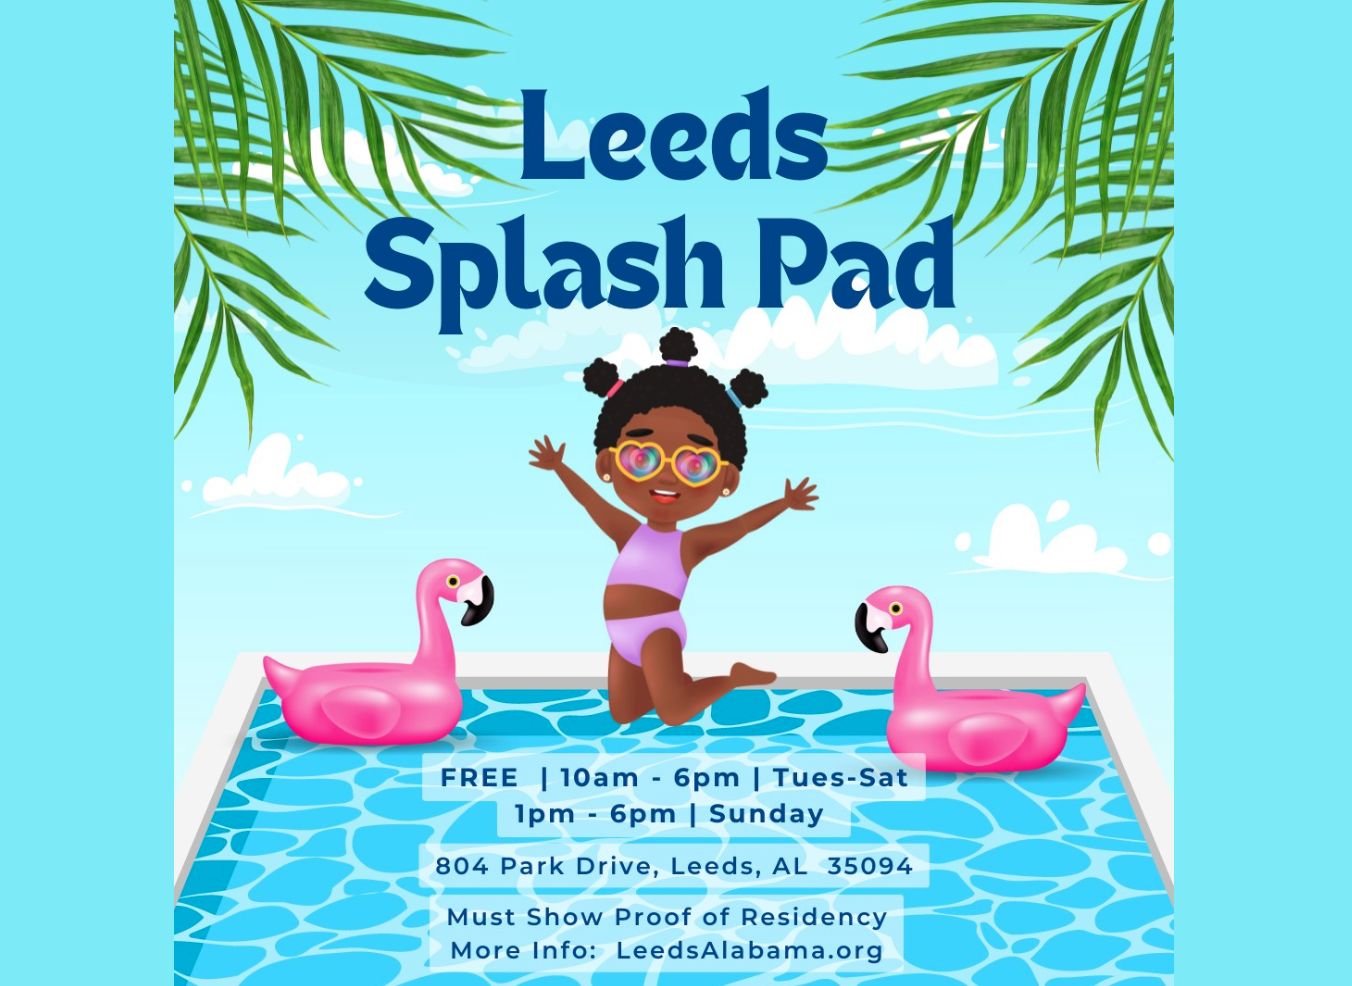 Leeds Splash Pad open for 2022 summer season